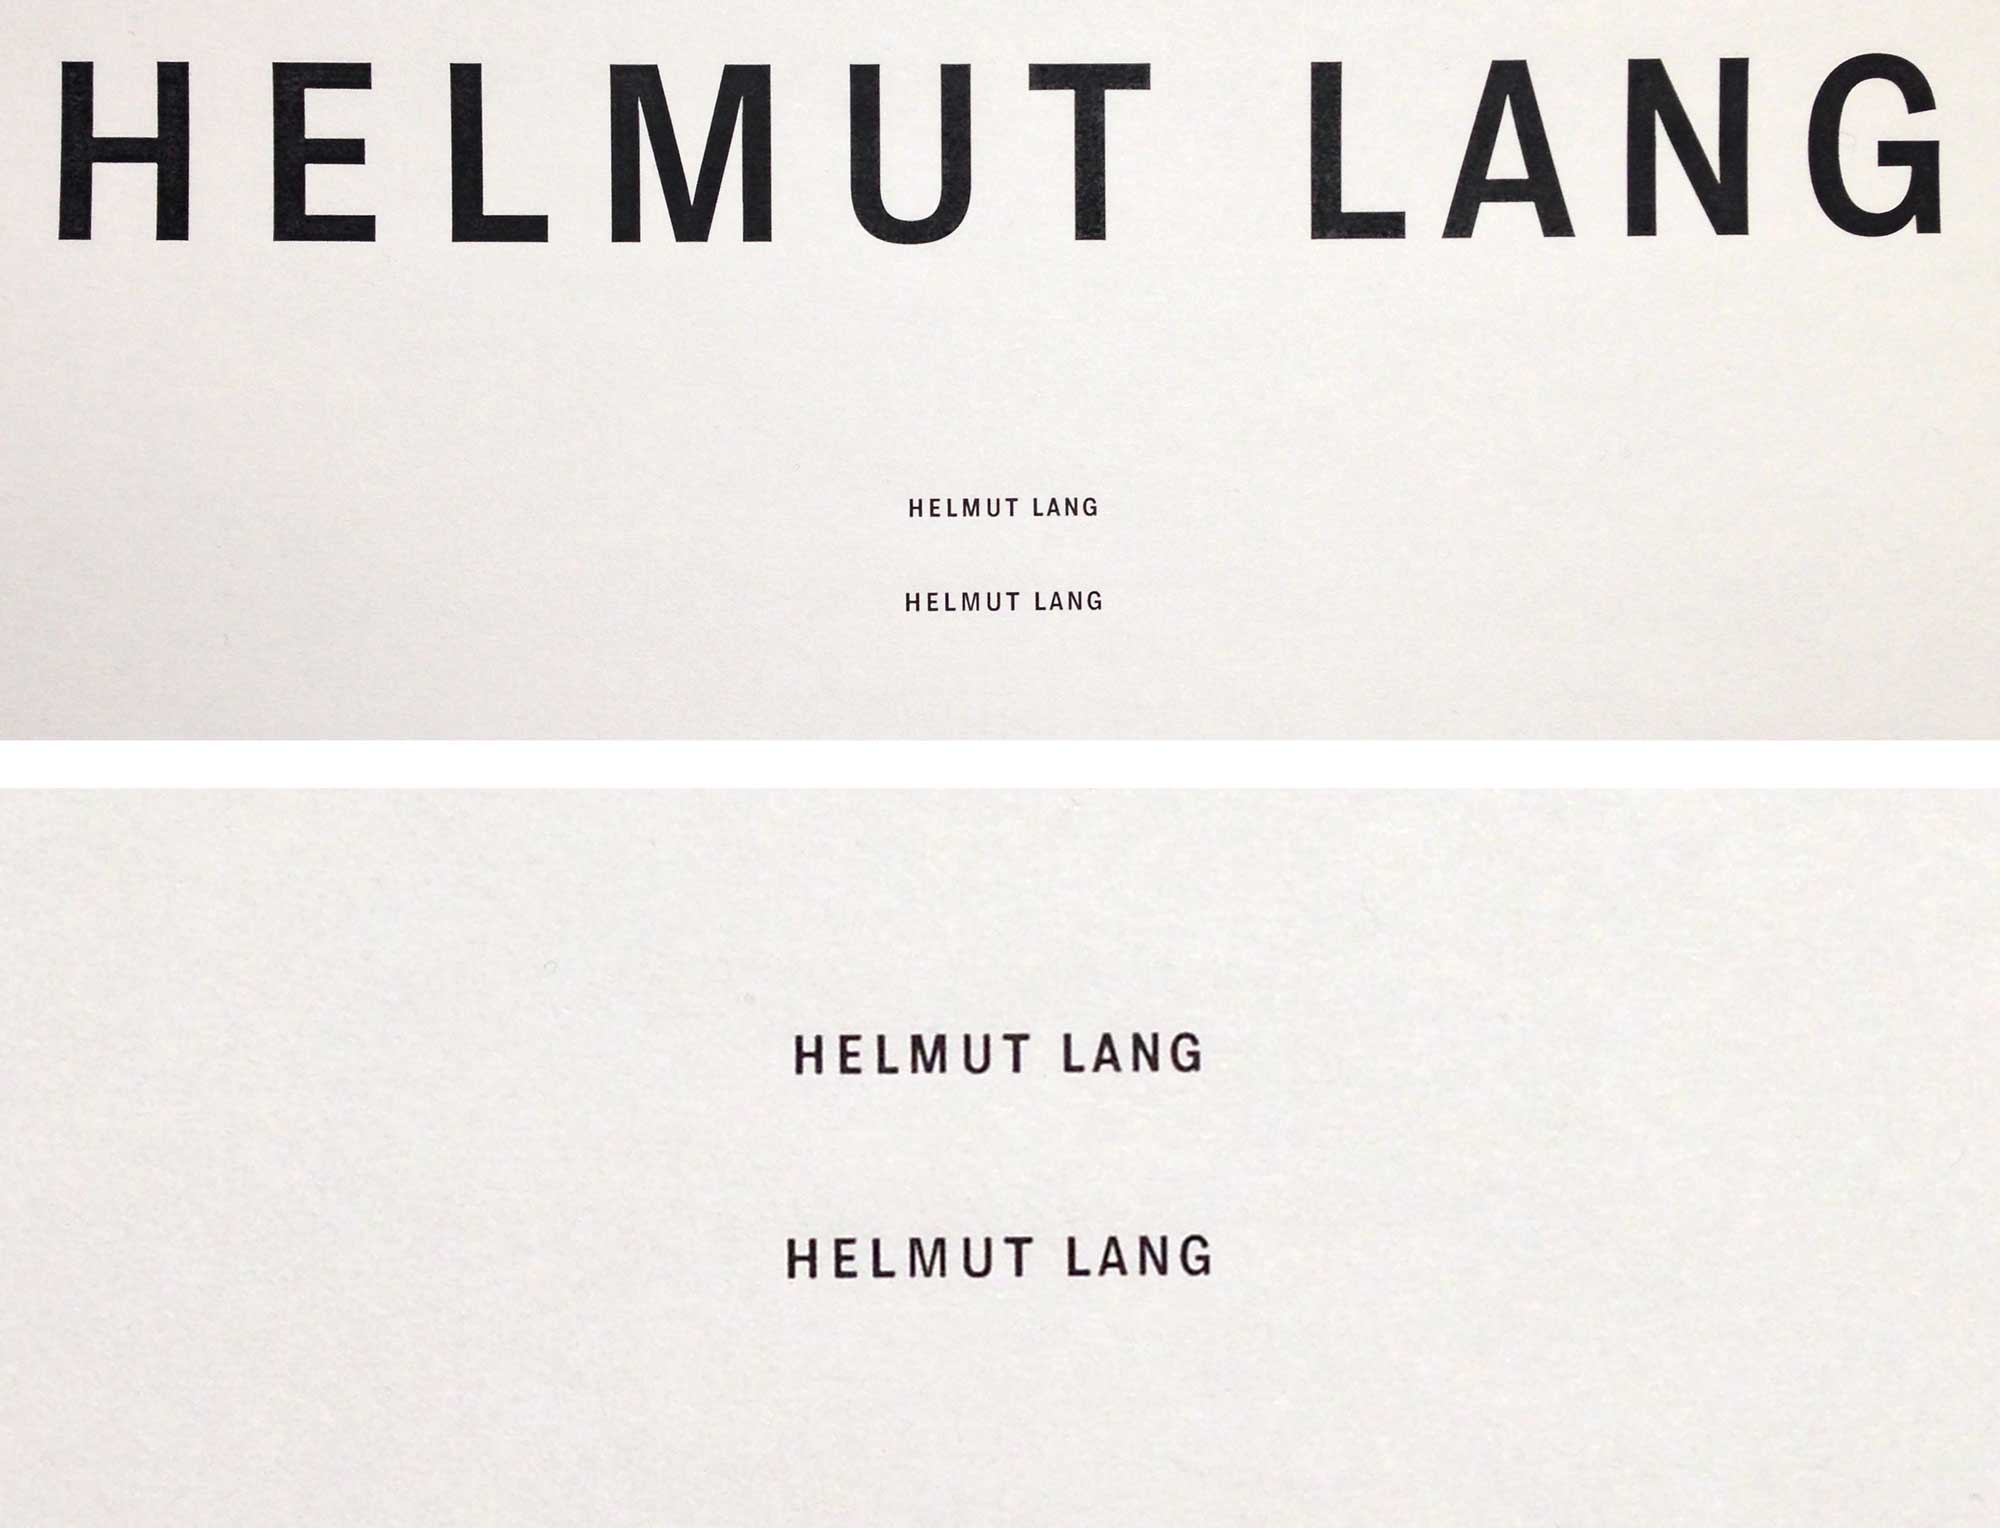 The Helmut Lang Logotype